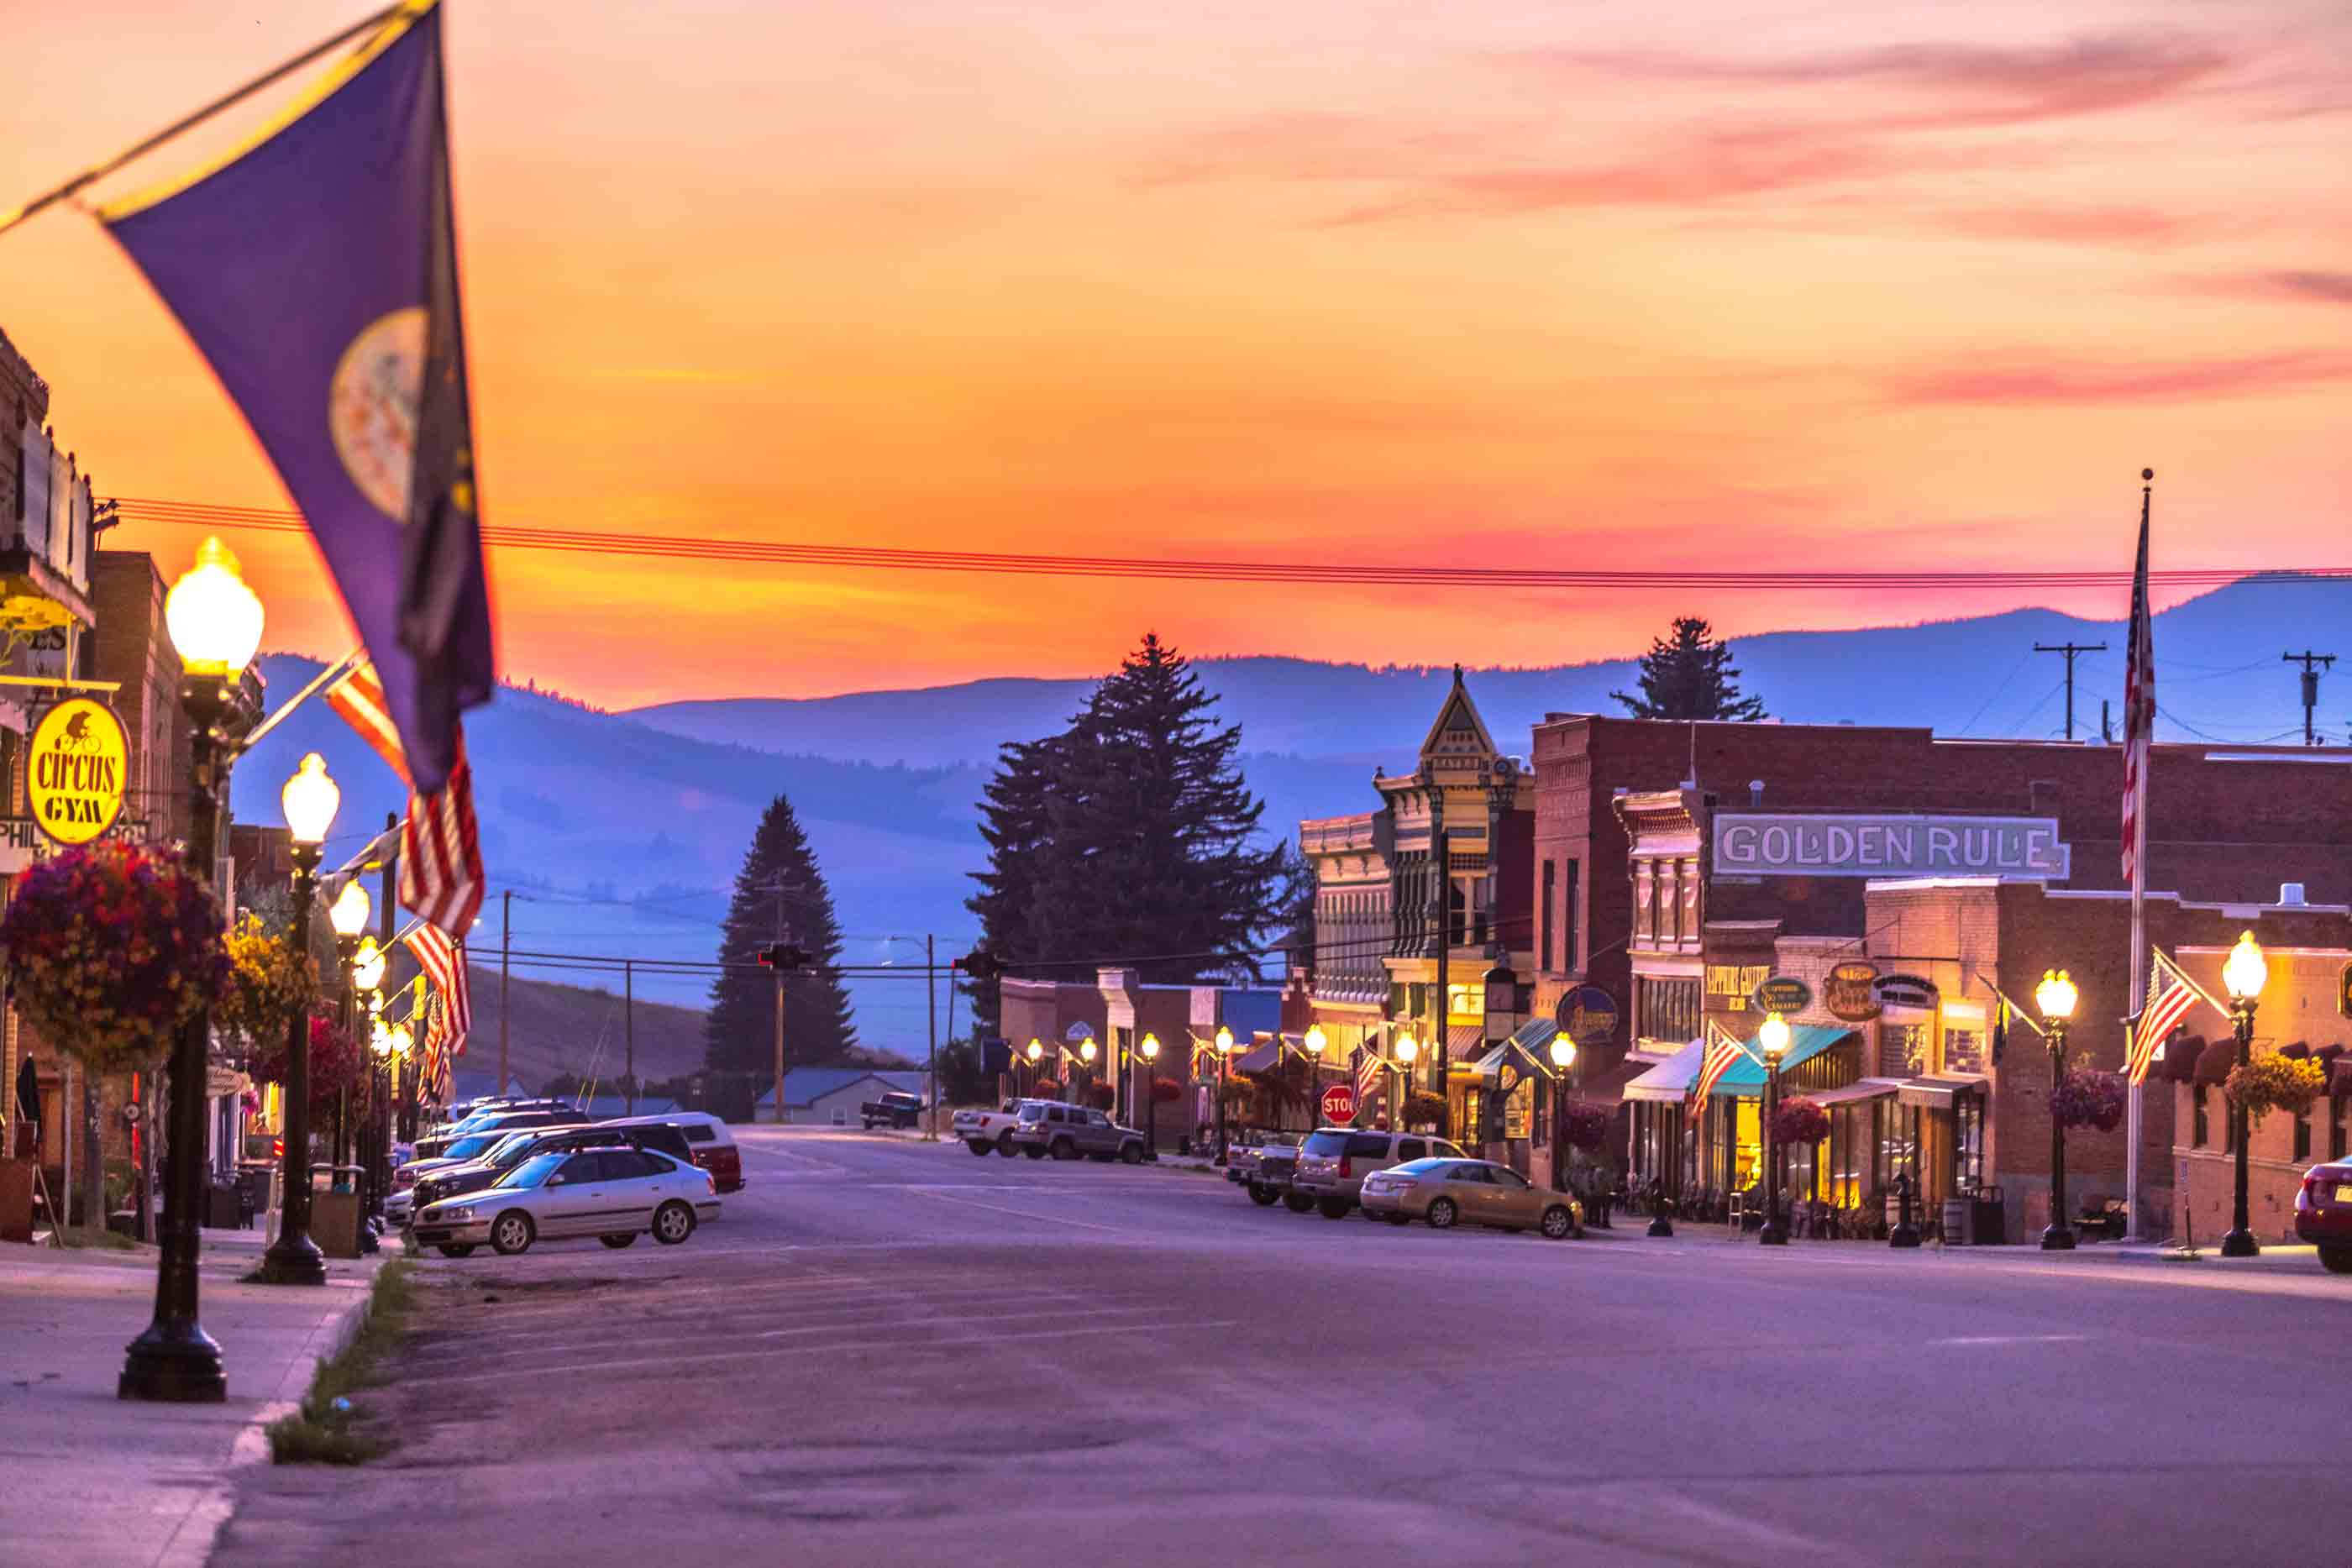 Street view of Broadway Street in Philipsburg, Montana during a stunning sunset.